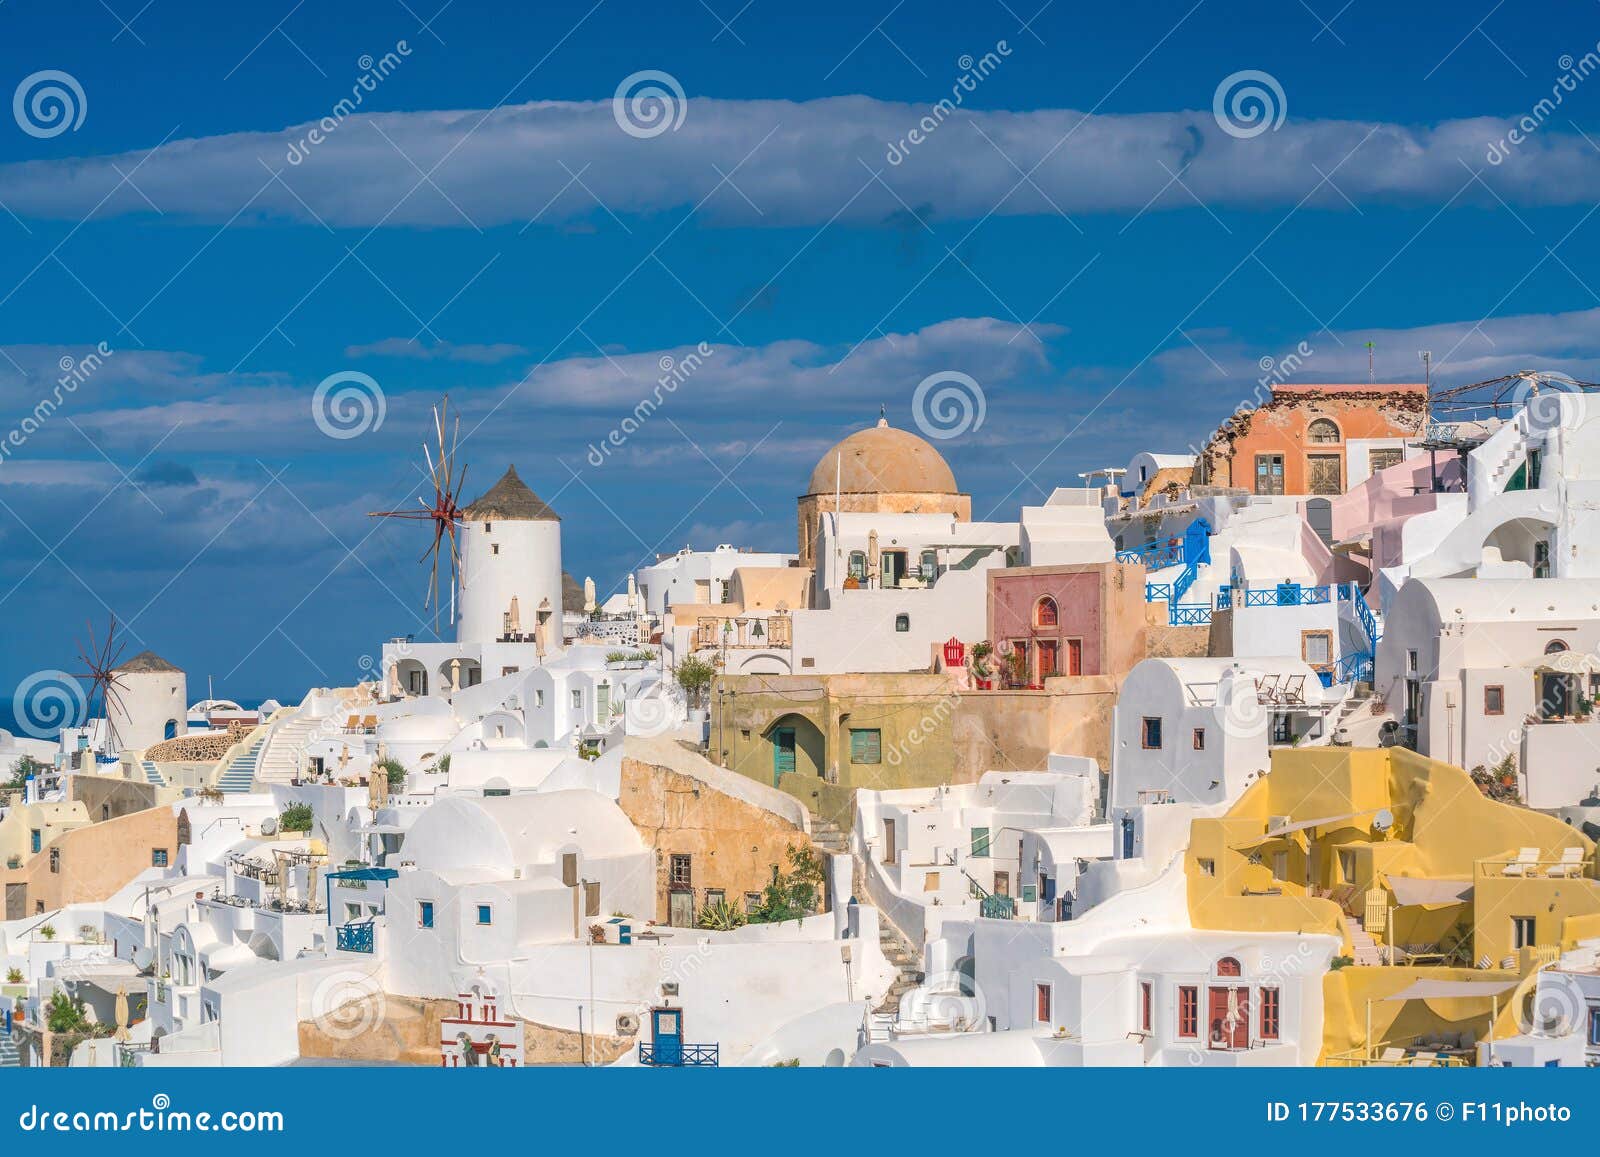 Oia Town Cityscape at Santorini Island in Greece Stock Photo - Image of ...